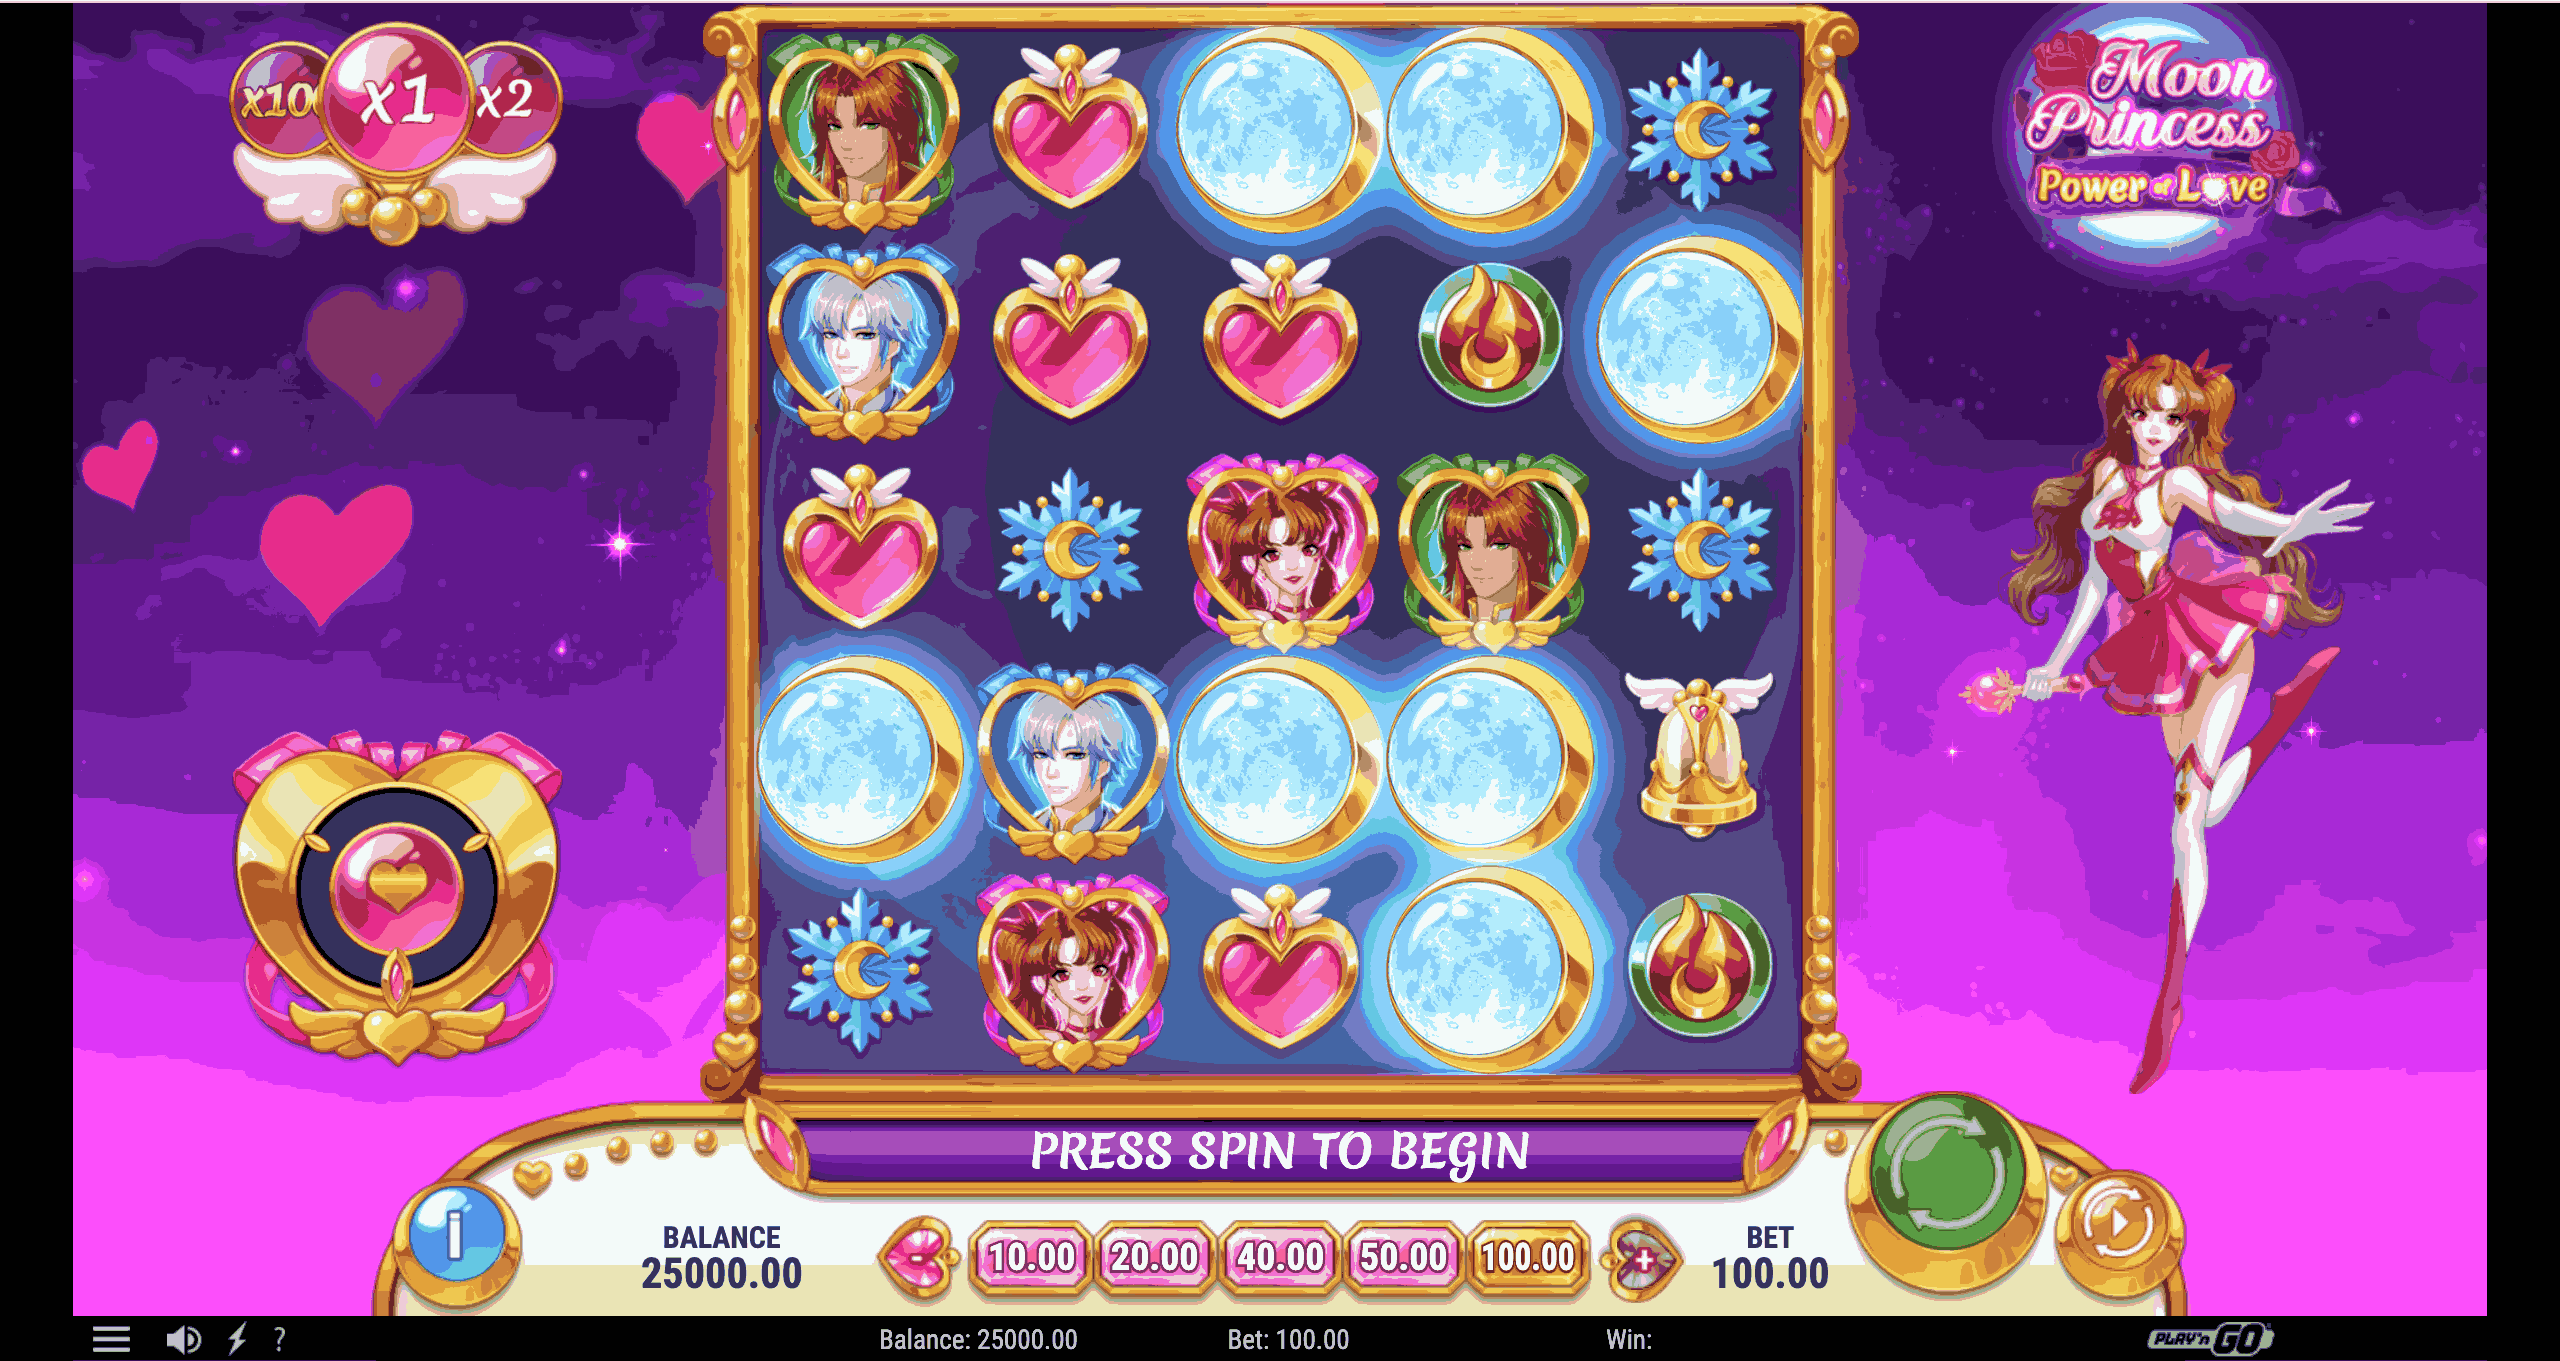 Moon Princess Power of Love Slot - 6